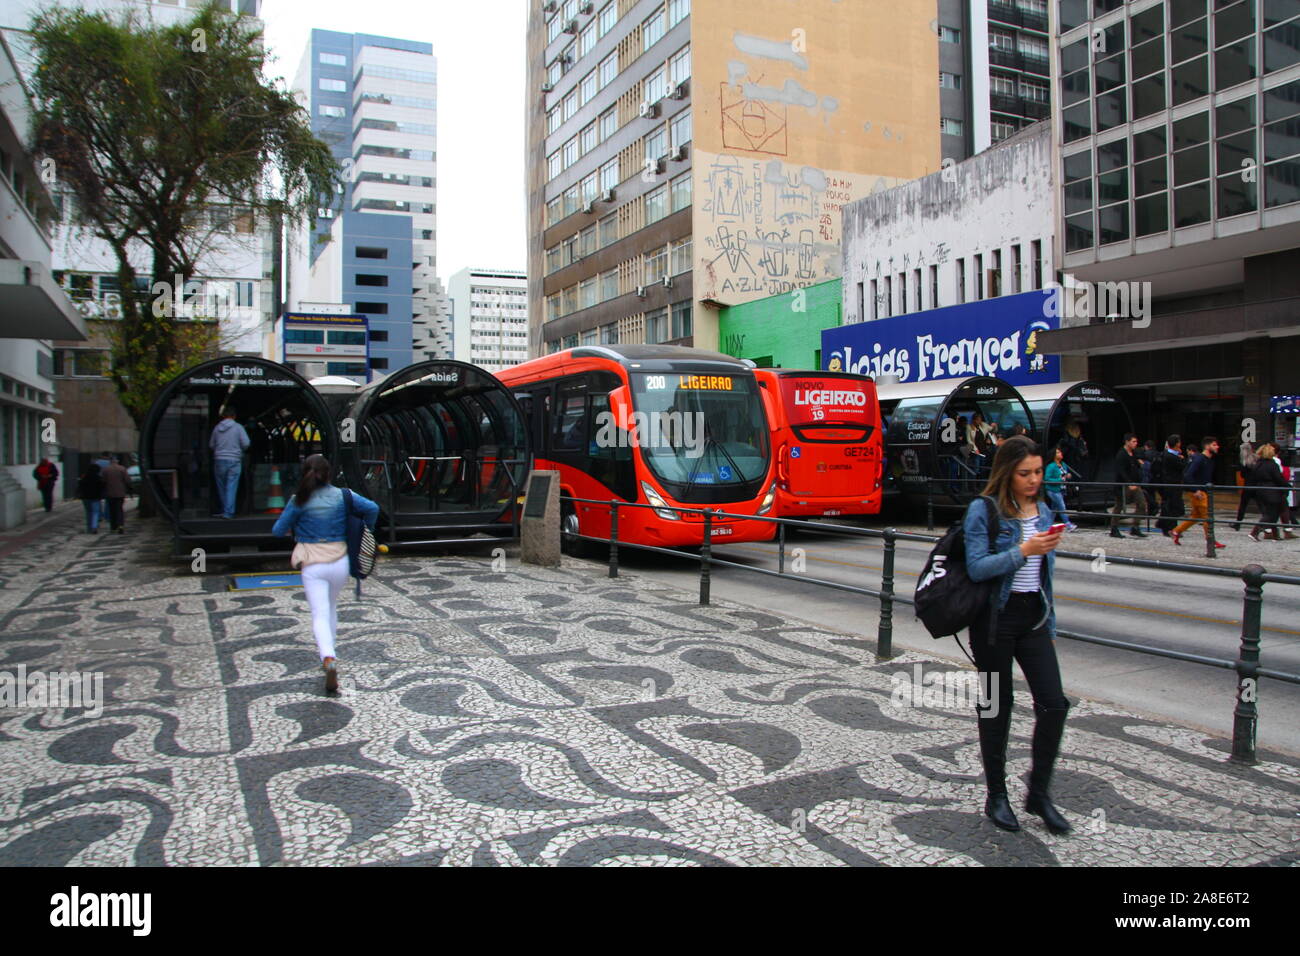 Curitiba bus rapid transit BRT system Central Station Estaçao Central bus stop Stock Photo